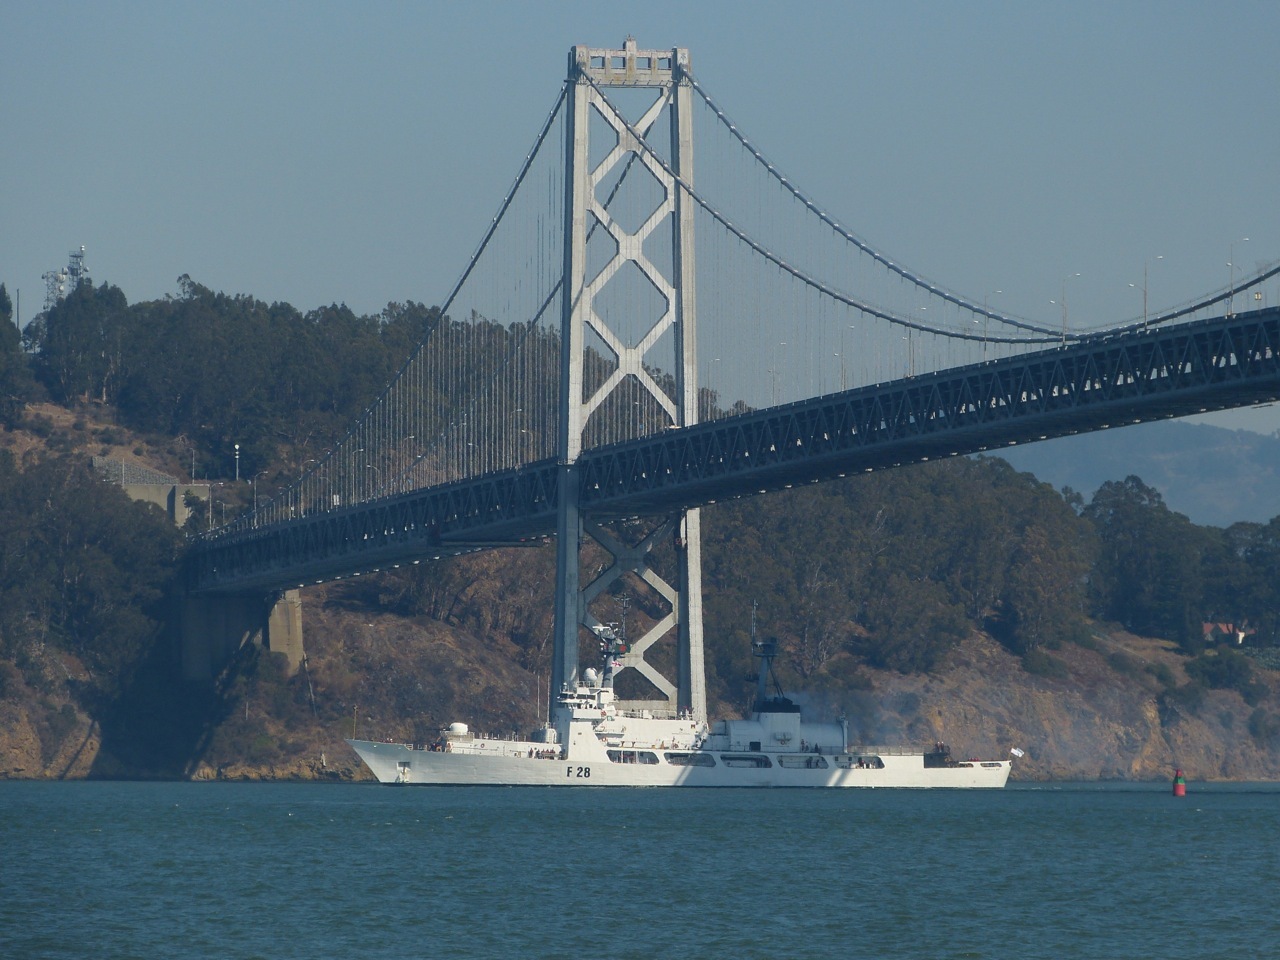 SOMUDRA JOY passing under the Golden Gate Bridge. (US Coast Guard photo)